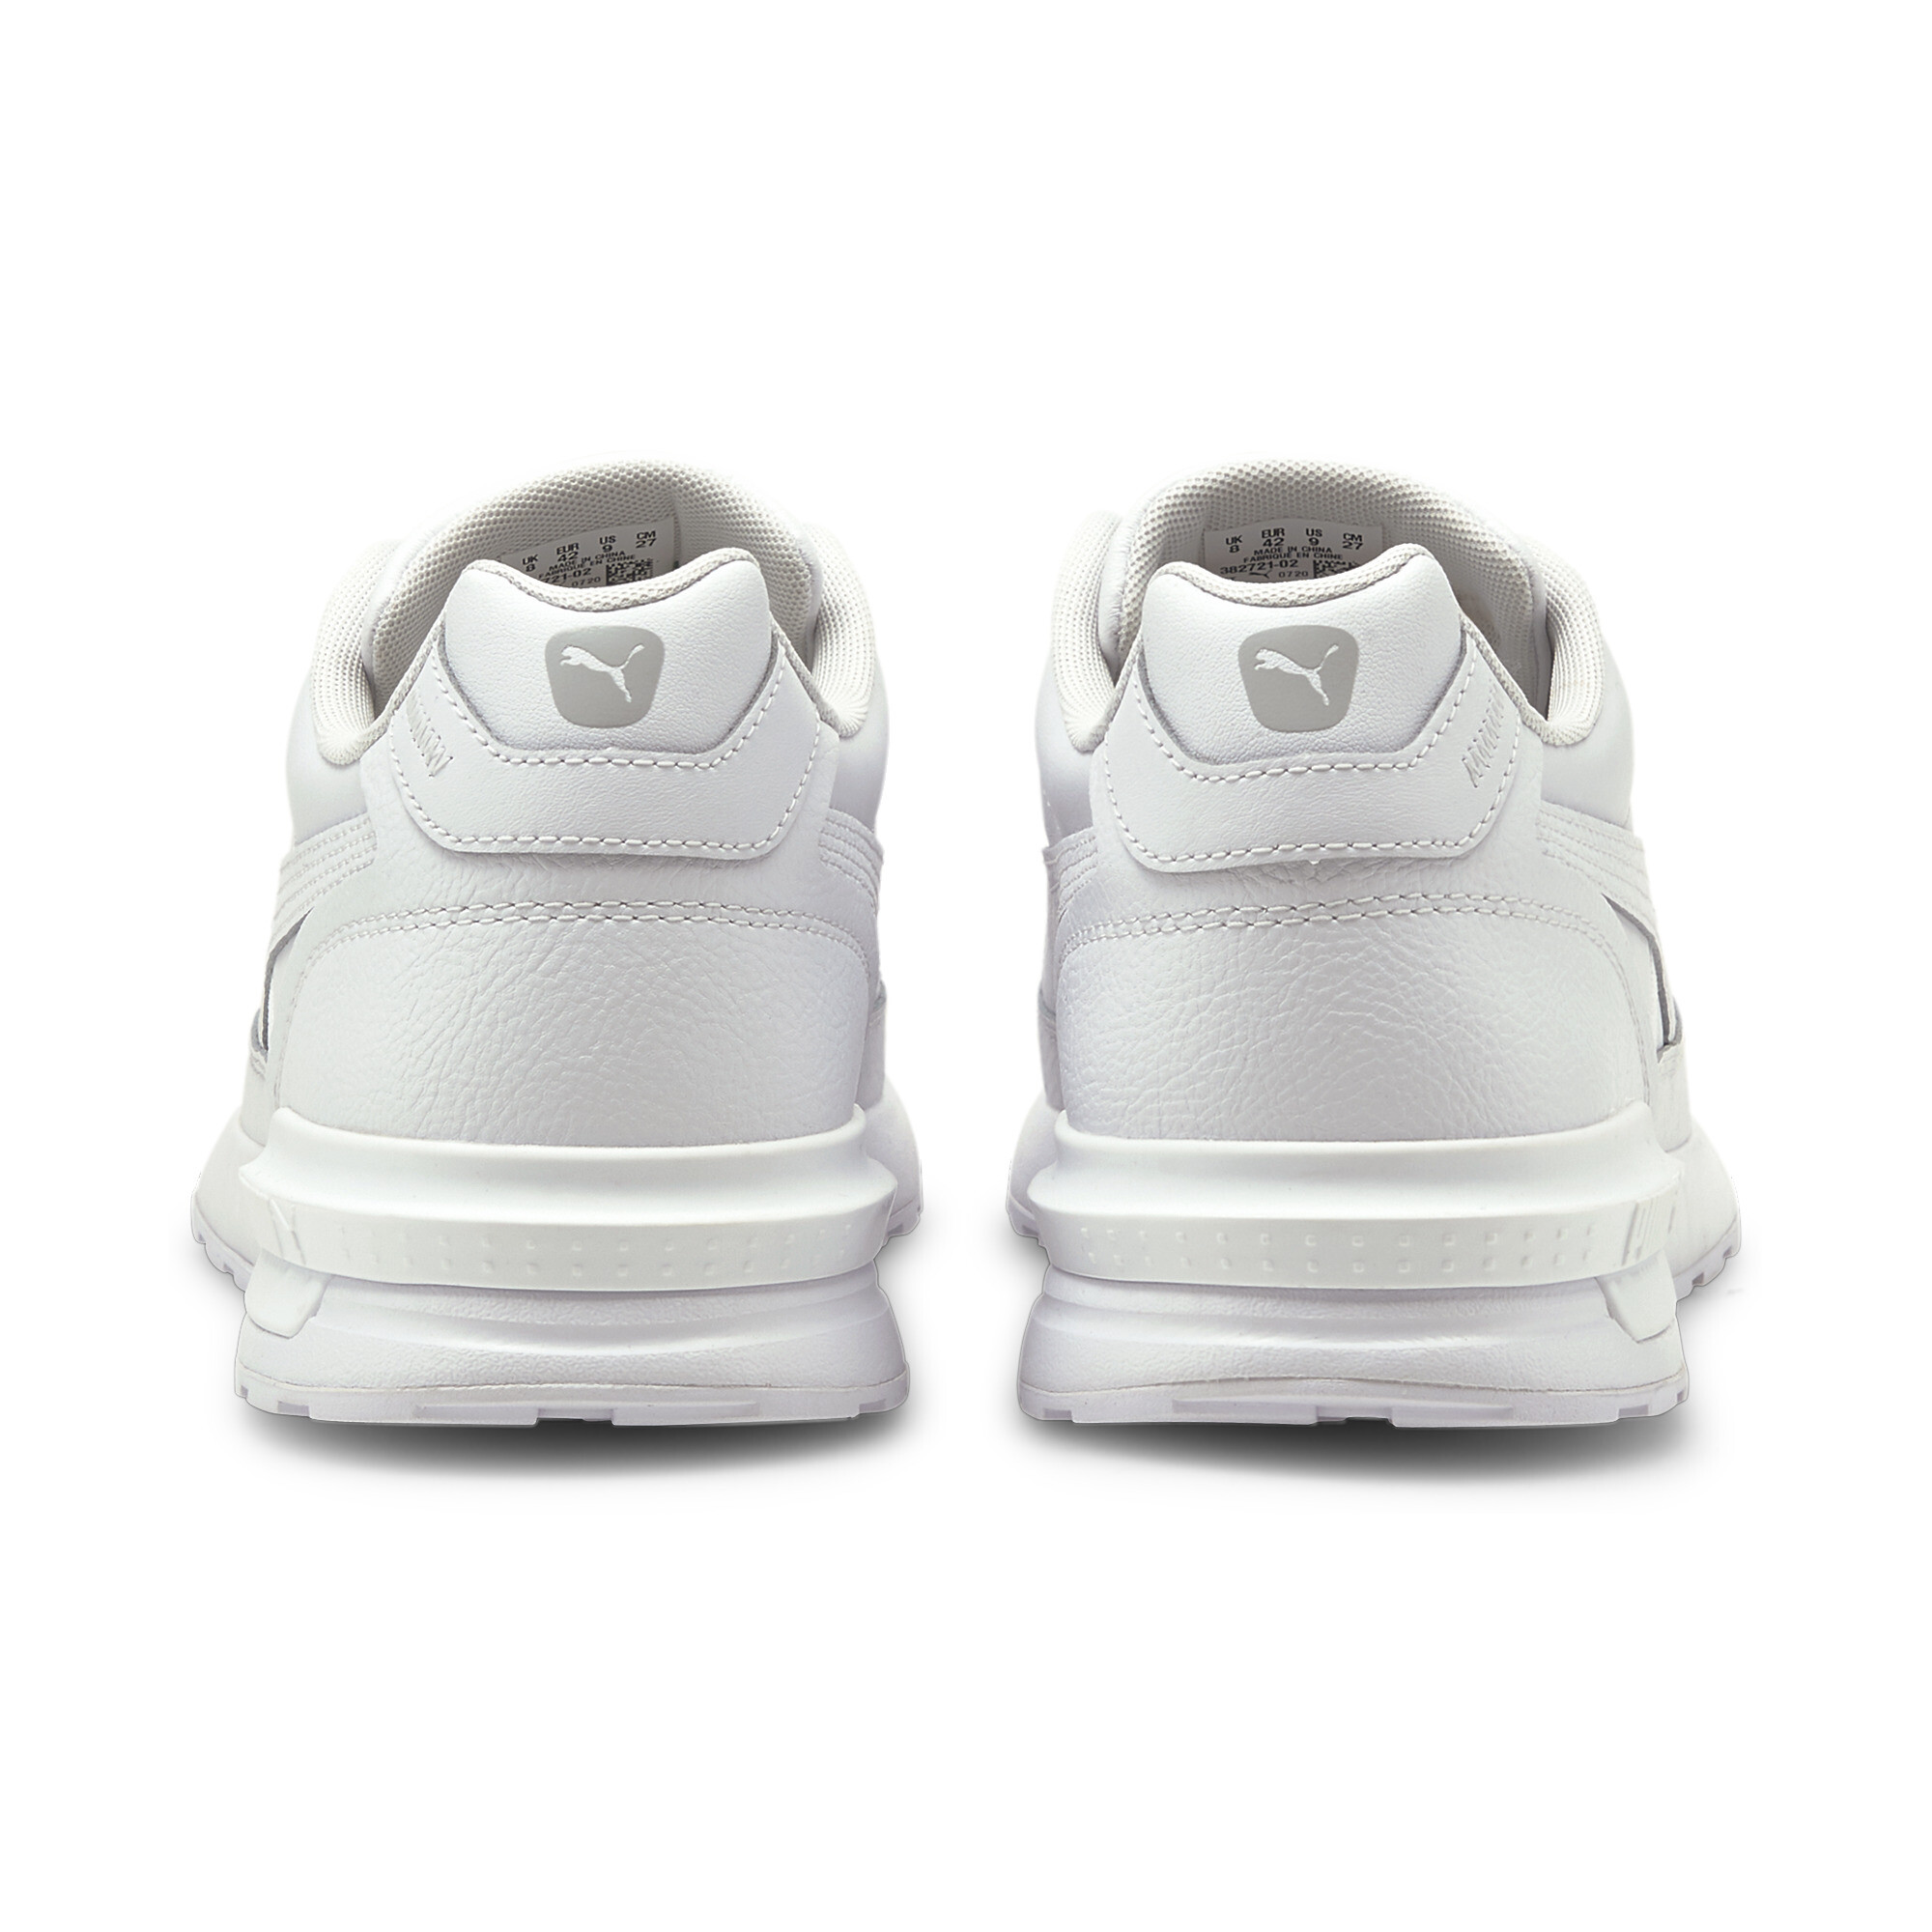 Puma Graviton Pro L Trainers, White, Size 38, Shoes